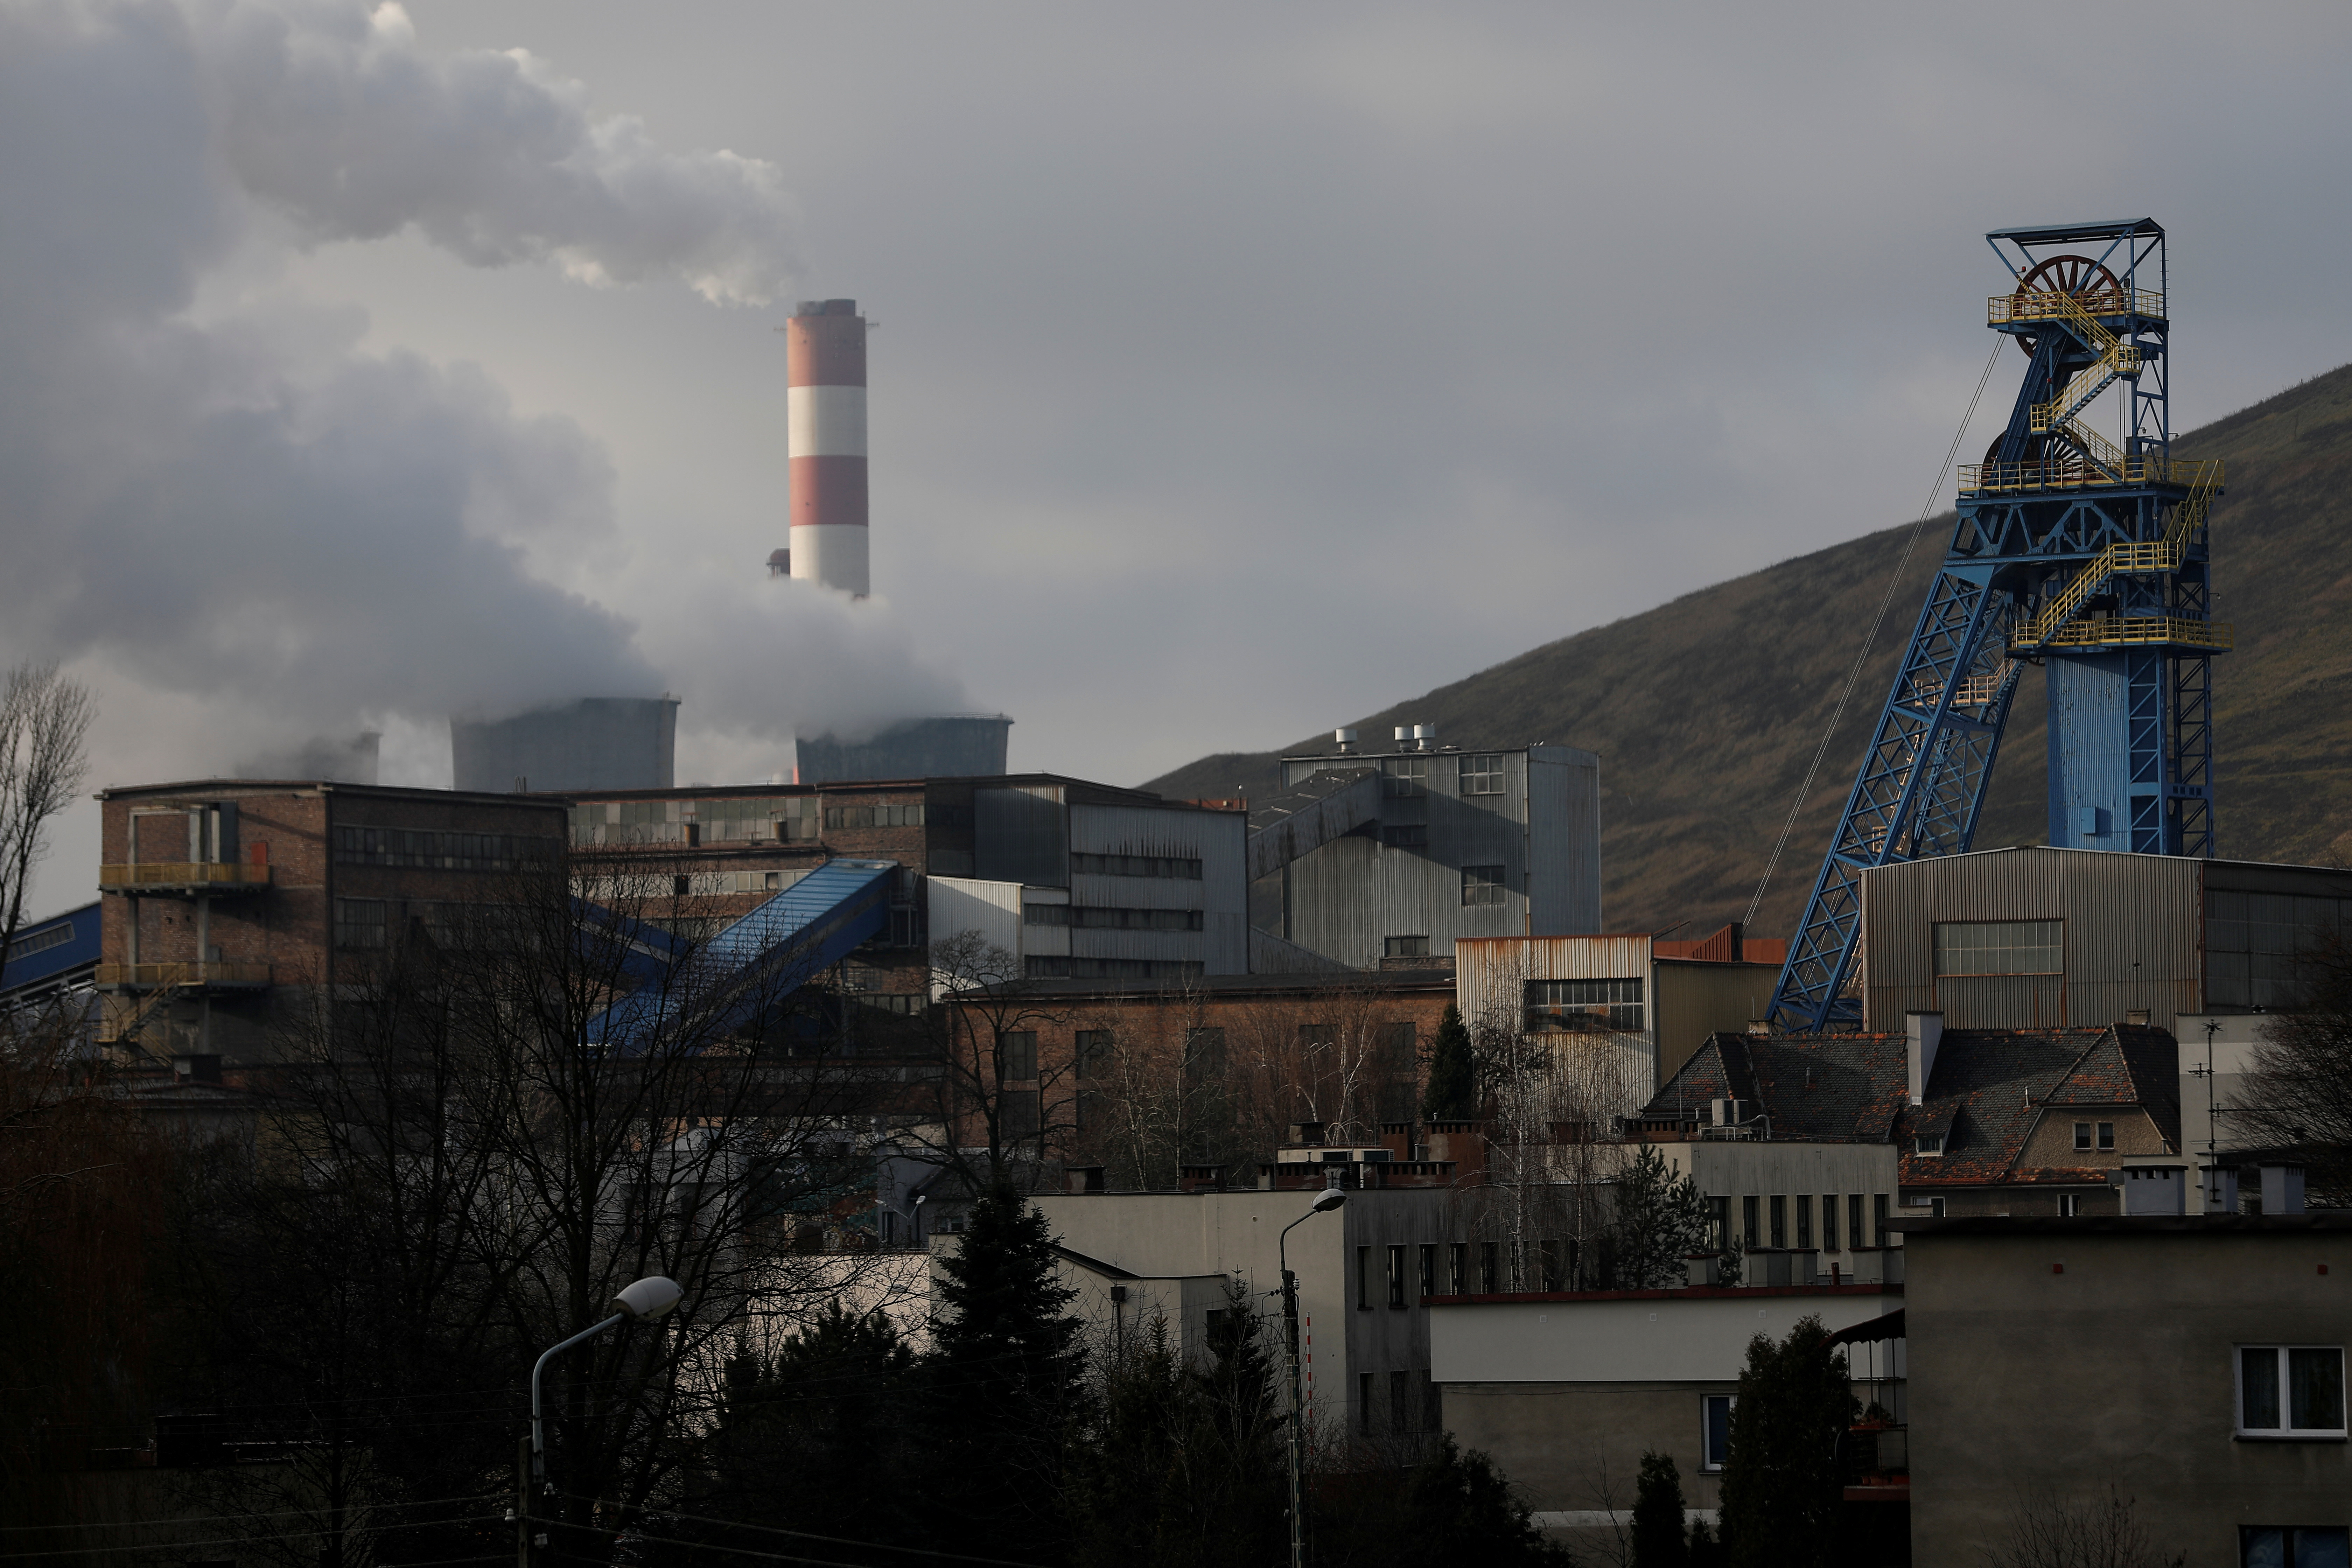 Chimney of Laziska Power Station, a thermal power plant, is seen behind Boleslaw Smialy Coal Mine in Laziska Gorne